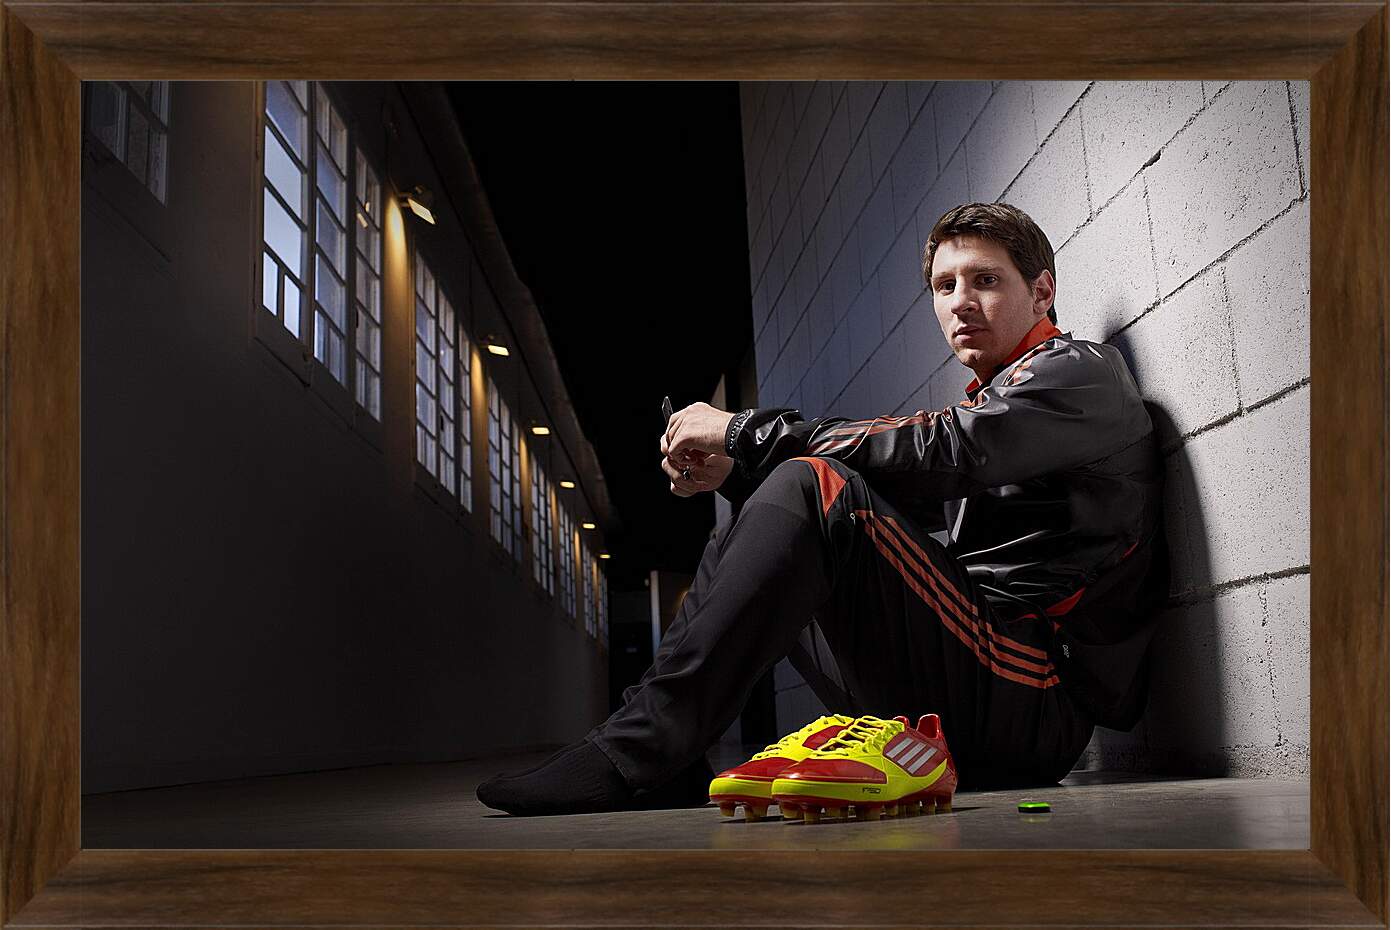 Картина в раме - Лионель Месси (Lionel Andres Messi )